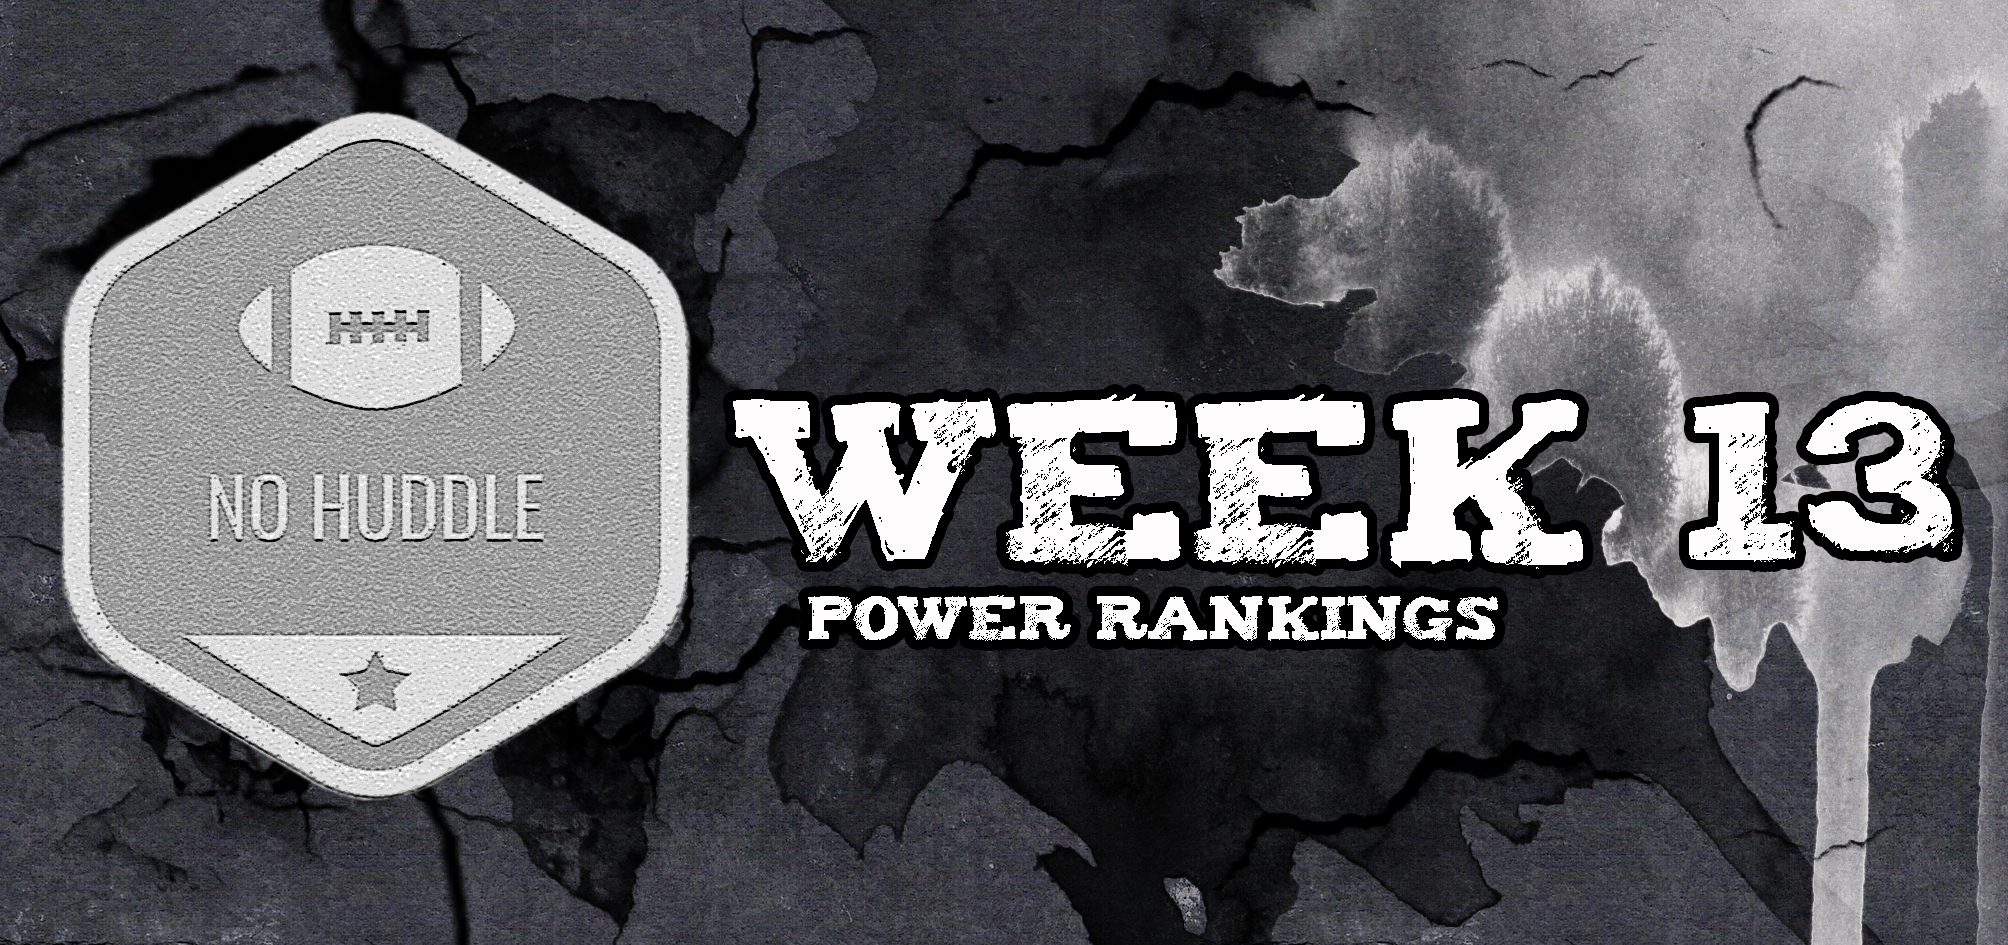 Power Rankings: Semana 13